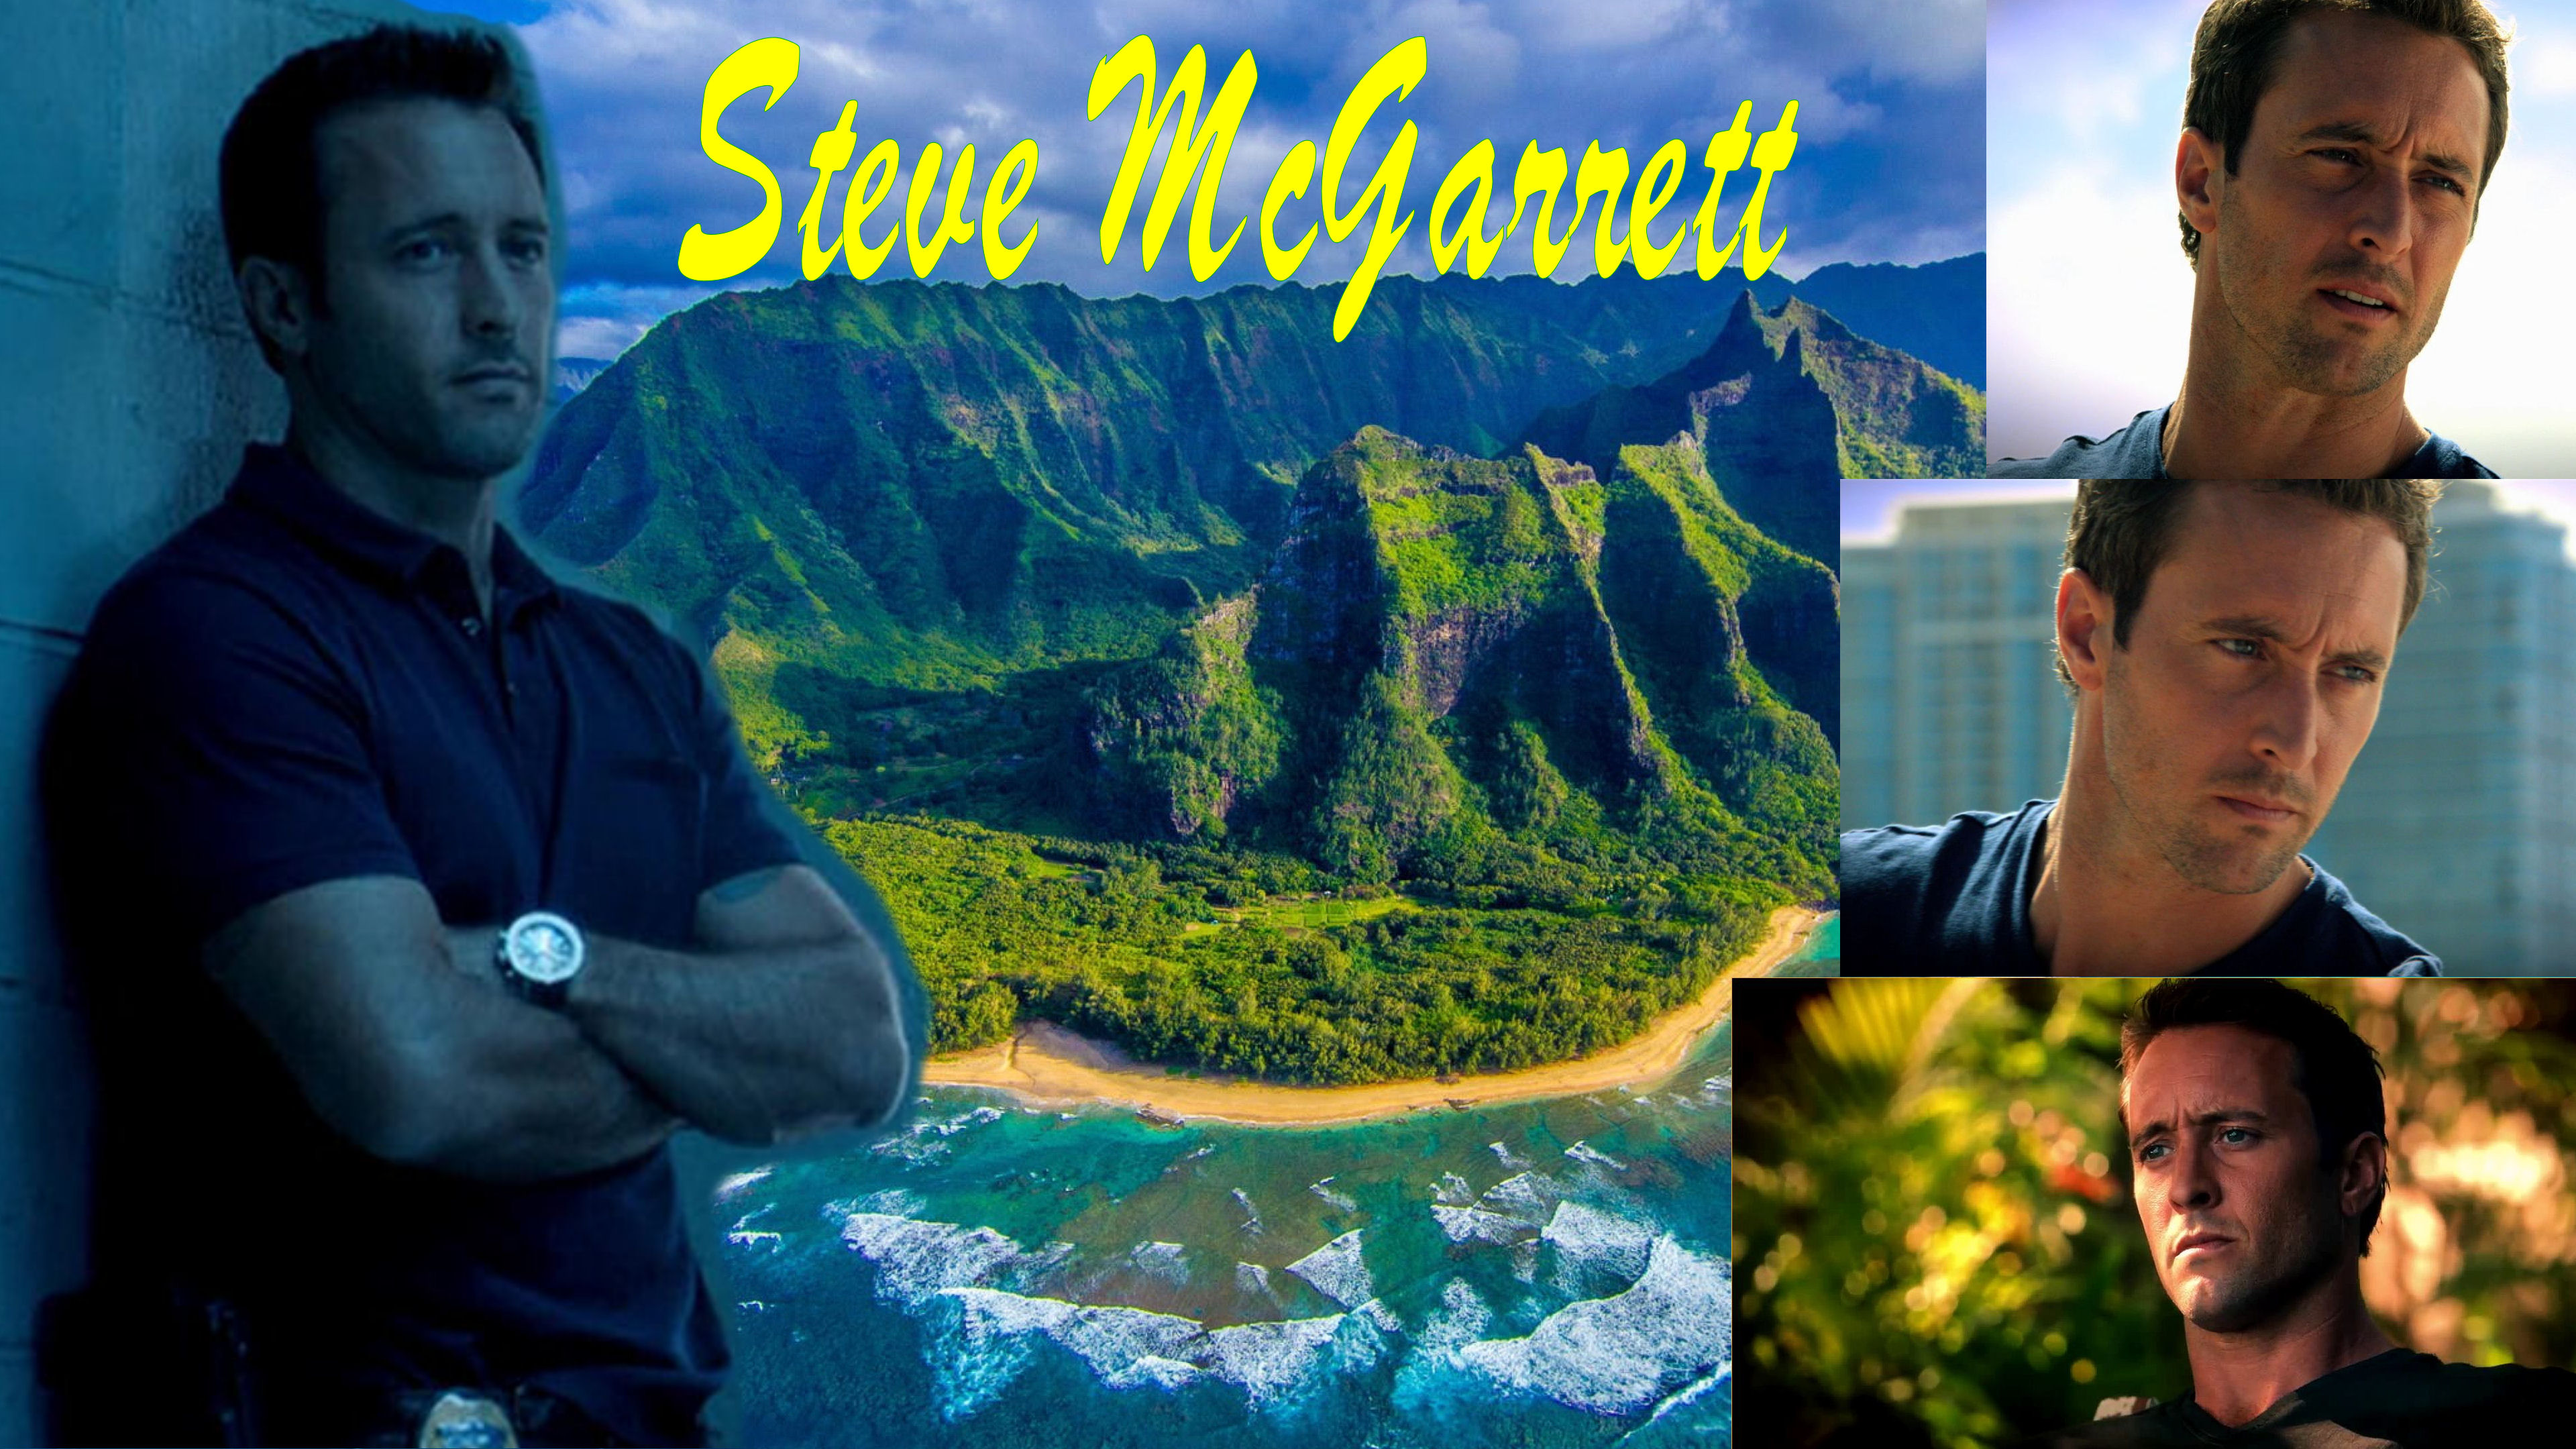 Steve McGarrett